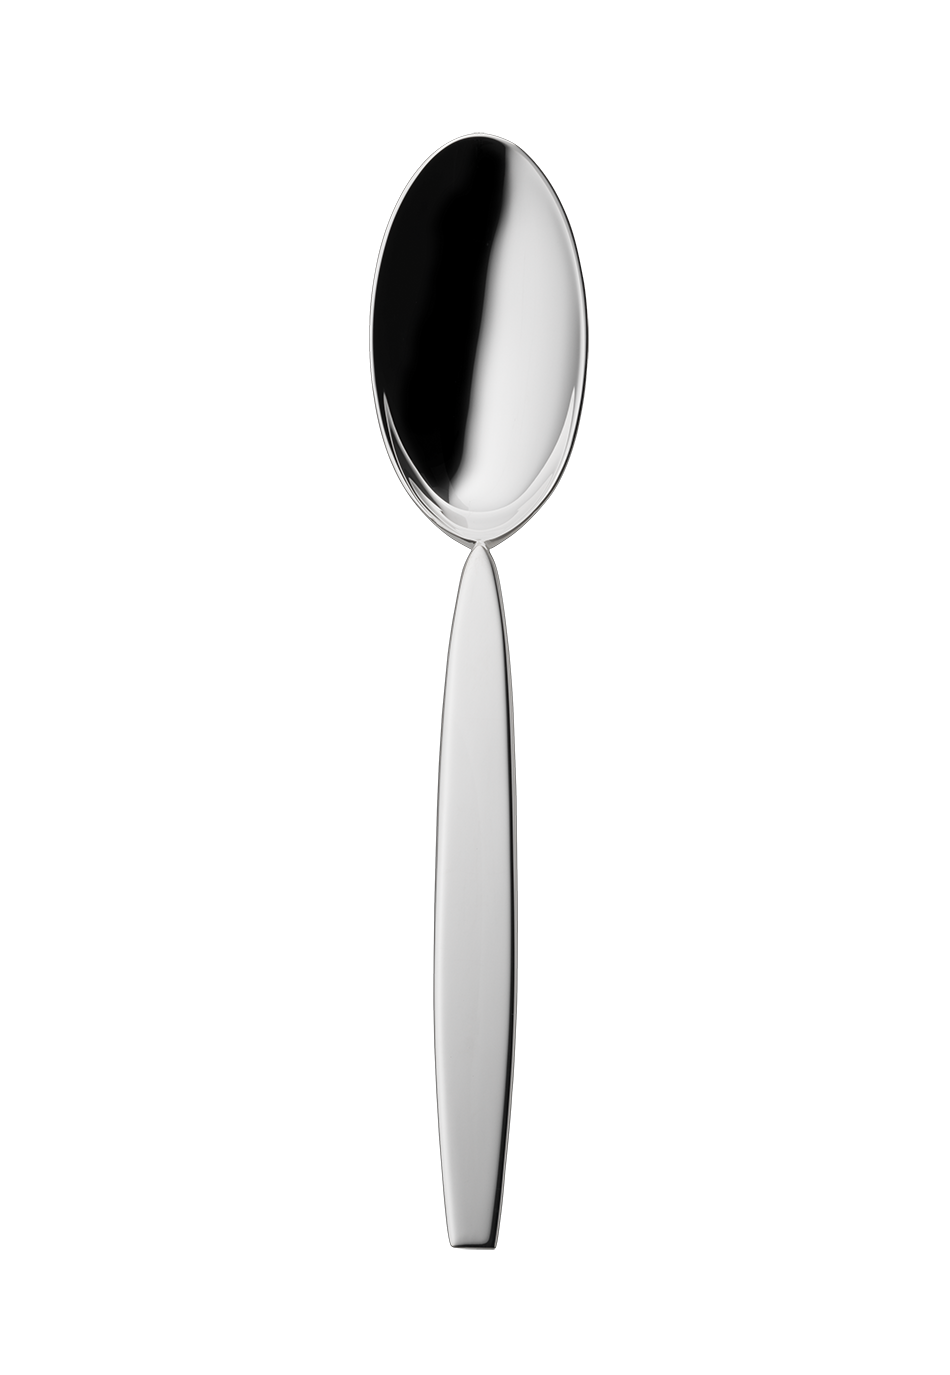 12" Dessert Spoon (150g massive silverplated)